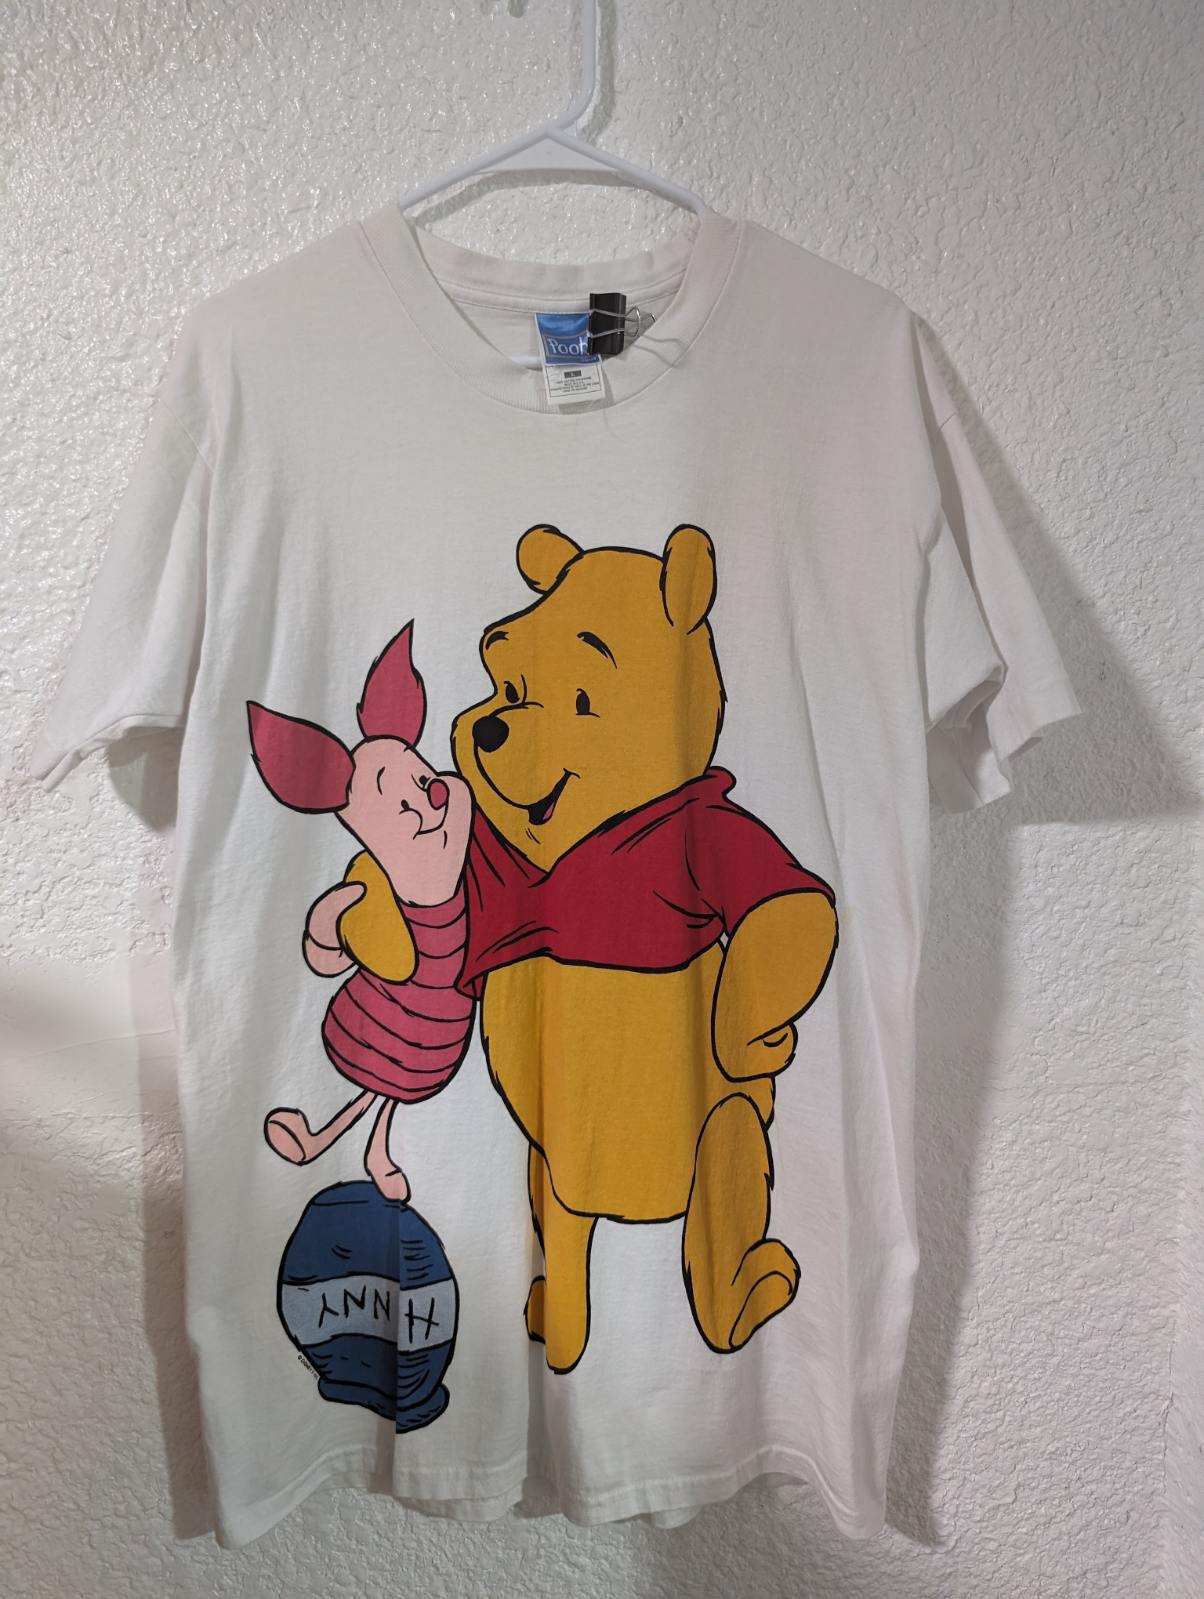 Pooh and Piglet Single Stitch Shirt Size L